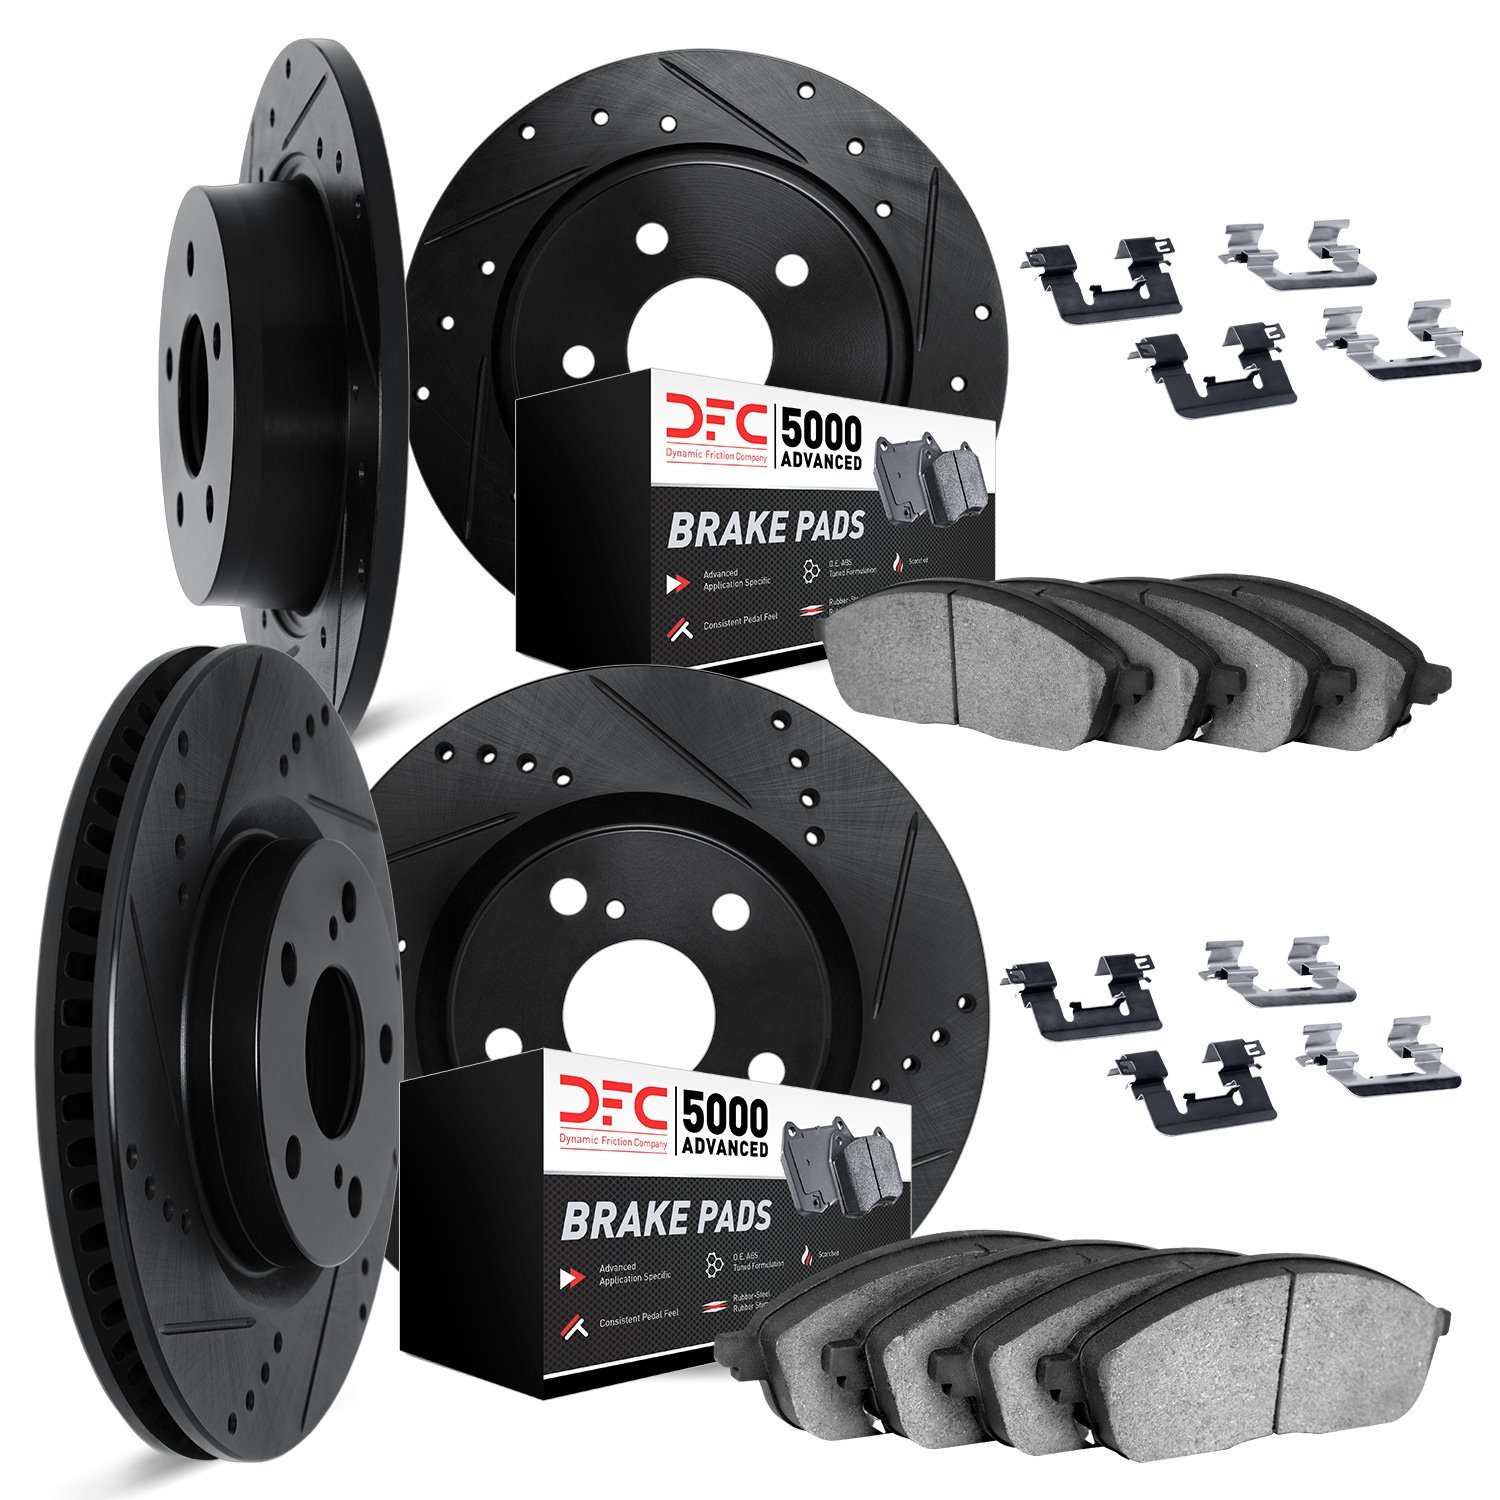 8514-40248 Drilled/Slotted Brake Rotors w/5000 Advanced Brake Pads Kit & Hardware [Black], 2001-2007 Mopar, Position: Front and